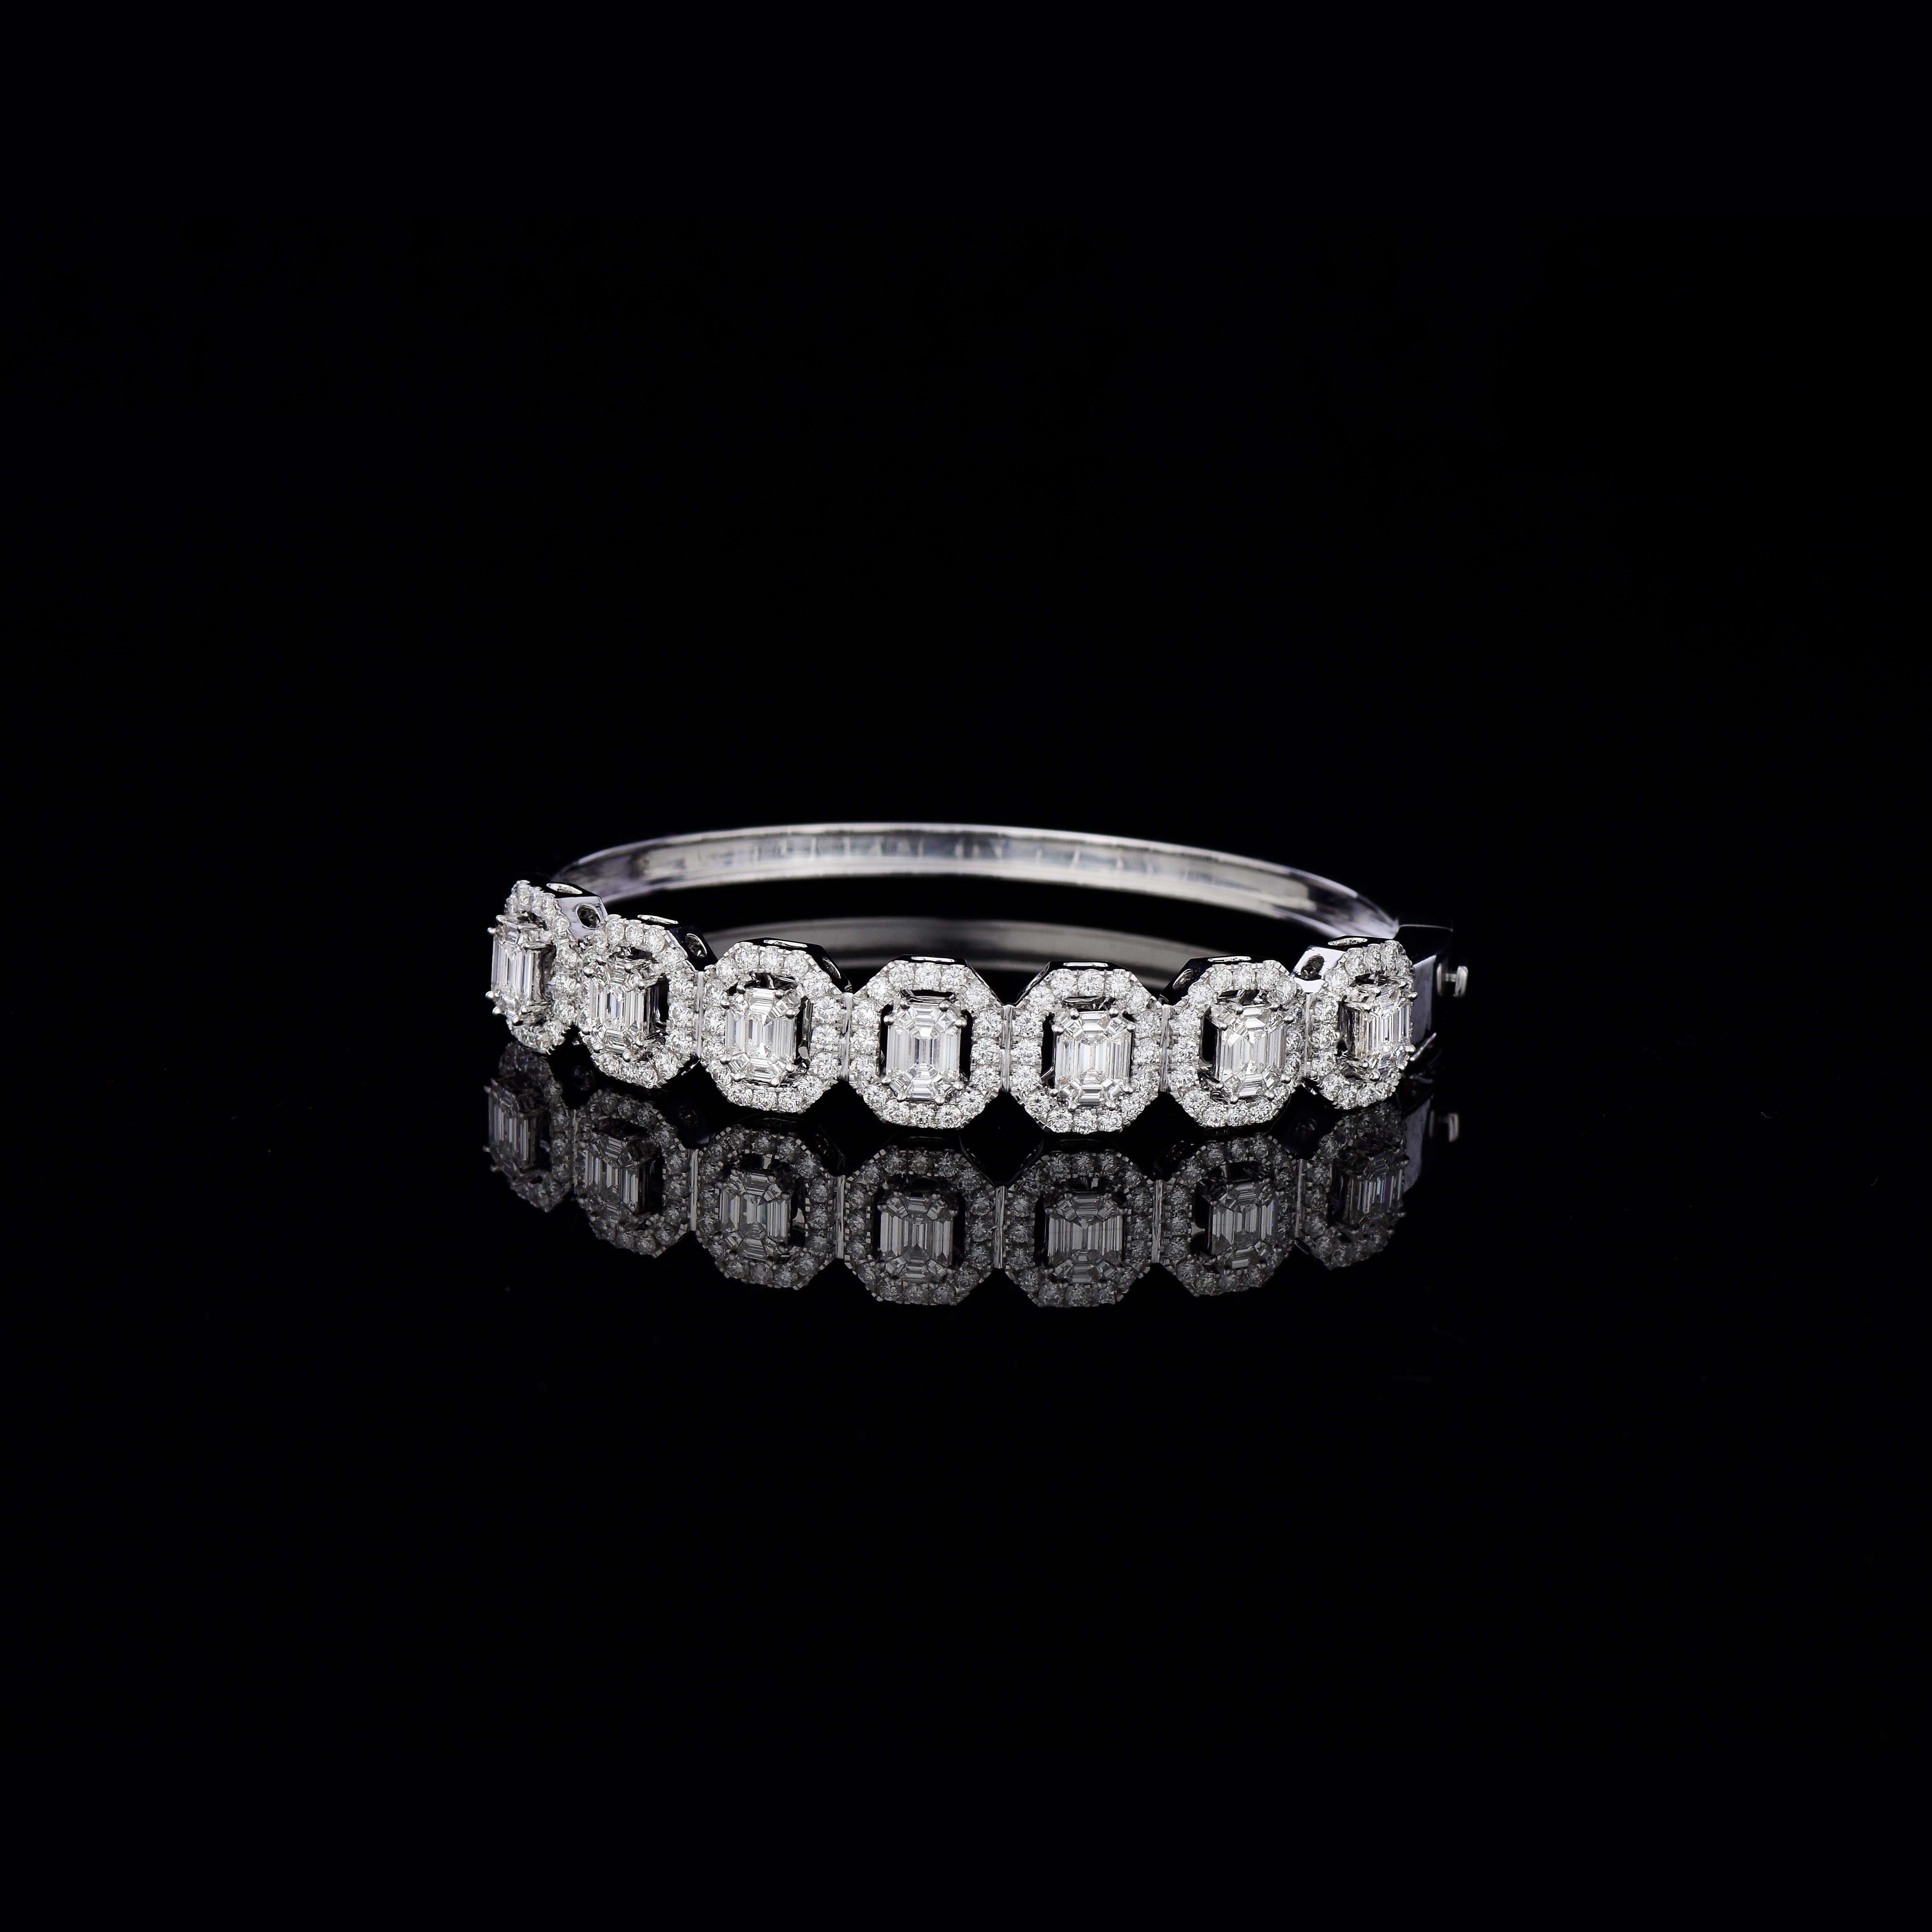 IGI 14k 3.92 Carat Diamond Antique Art Deco Bangle Bracelet For Sale 2